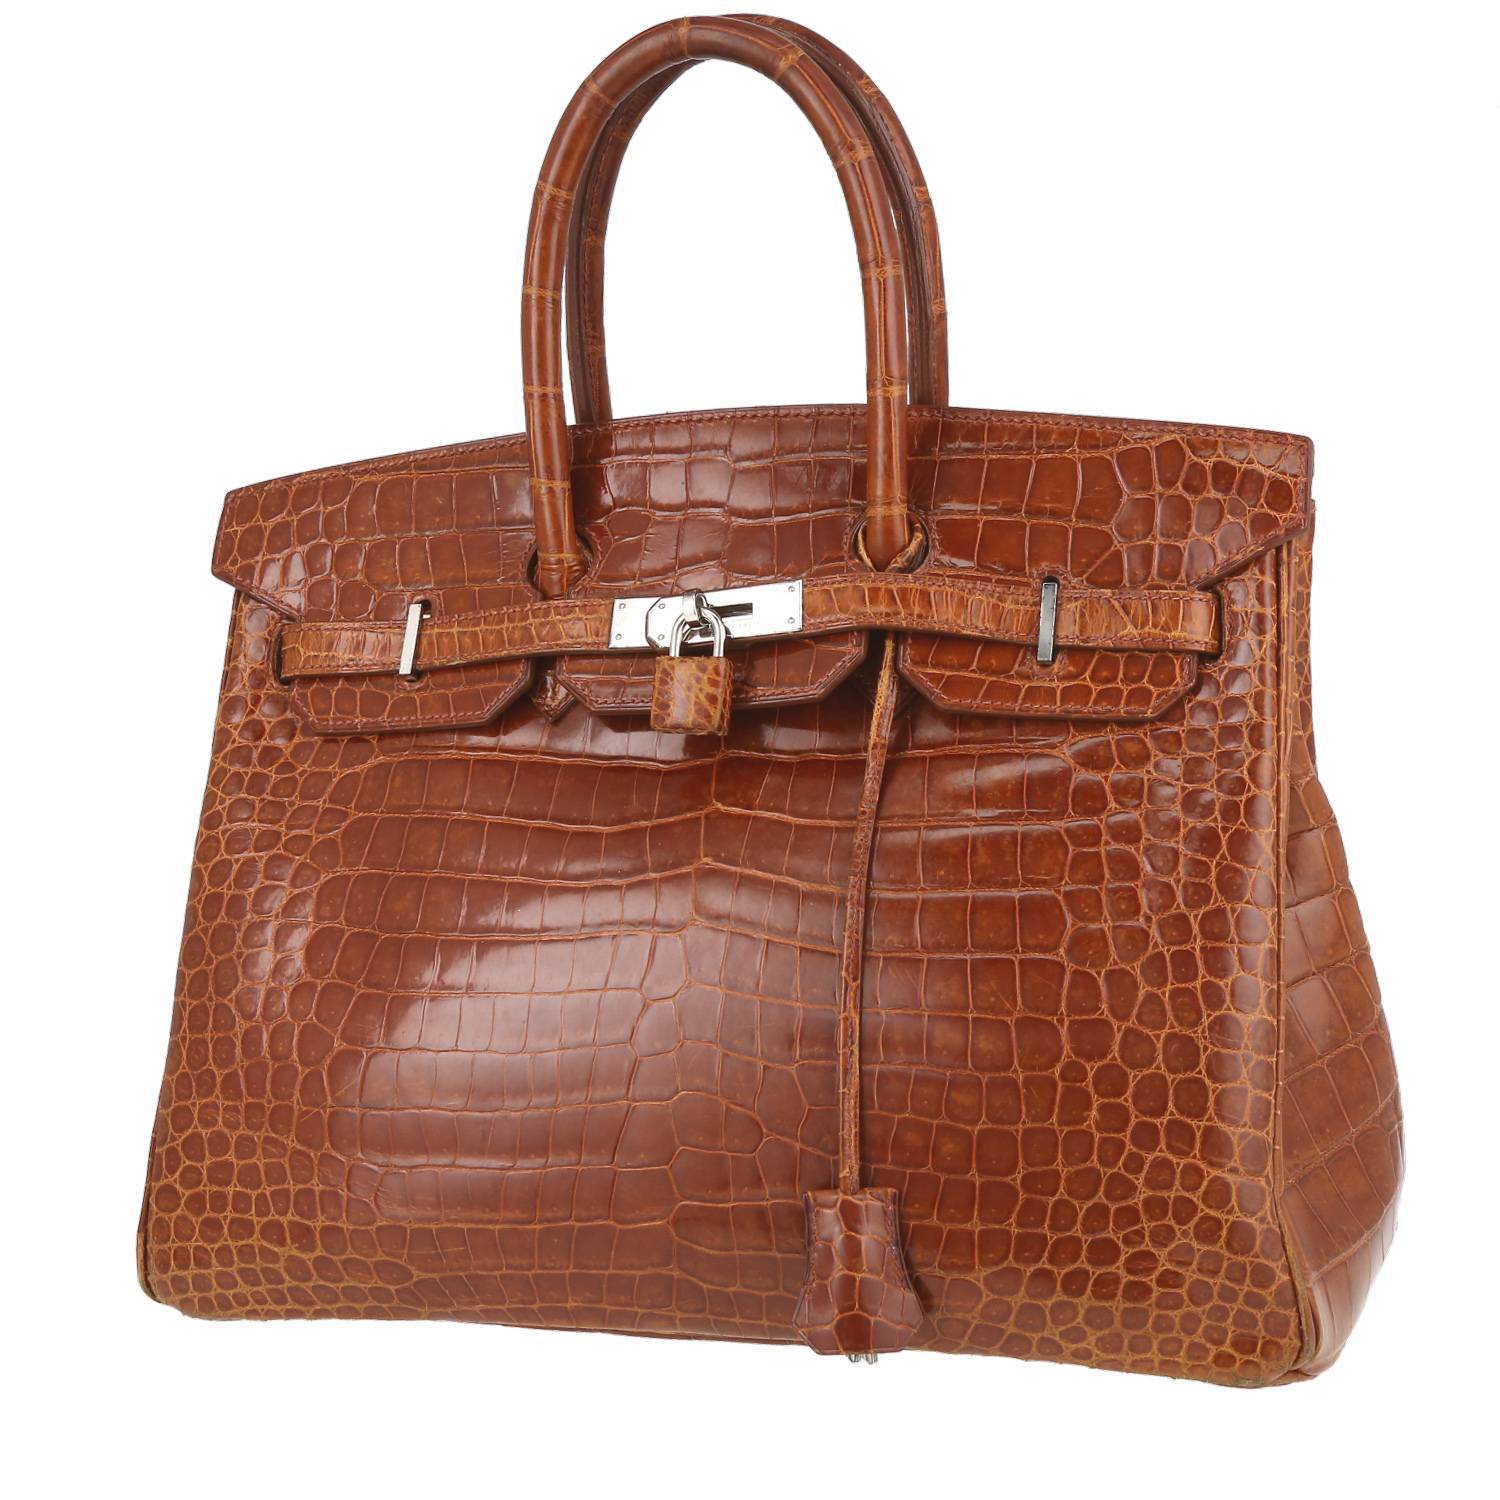 Hermès Birkin Handbag 402182